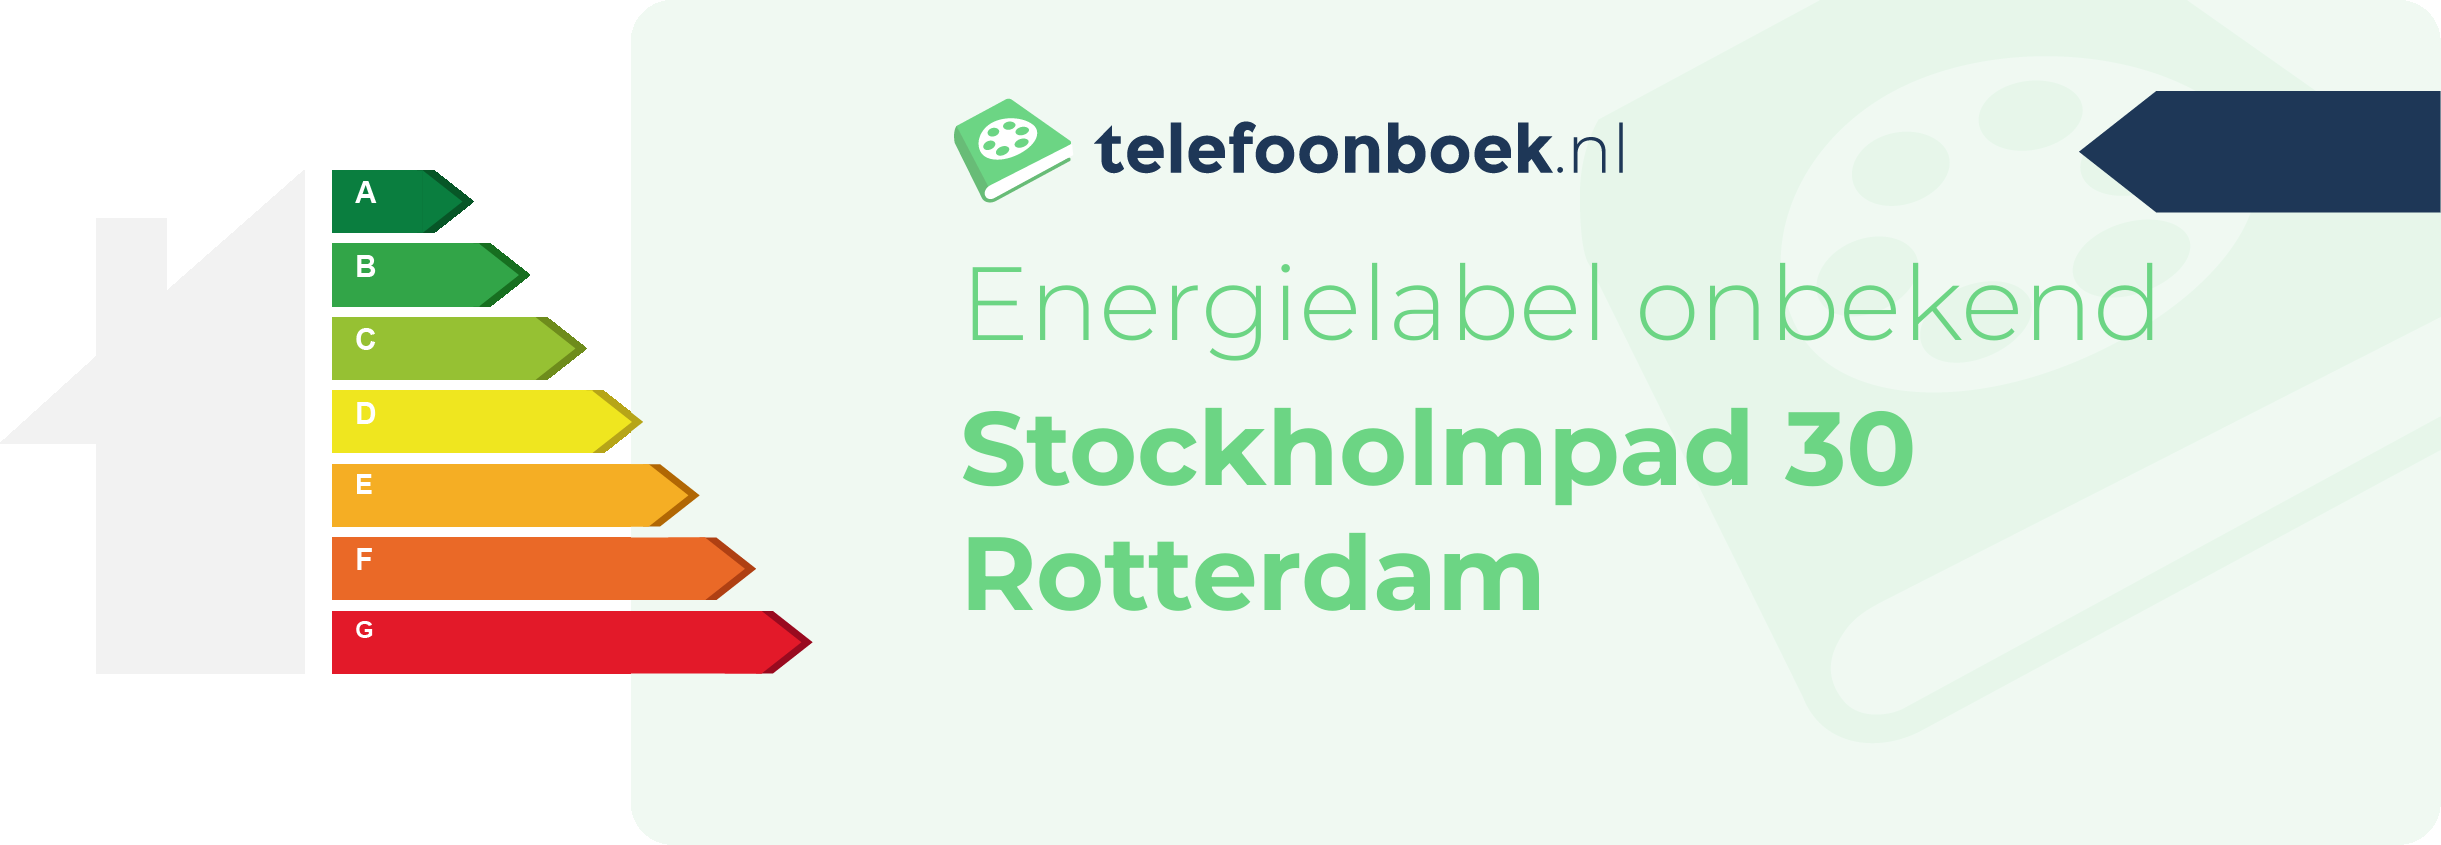 Energielabel Stockholmpad 30 Rotterdam